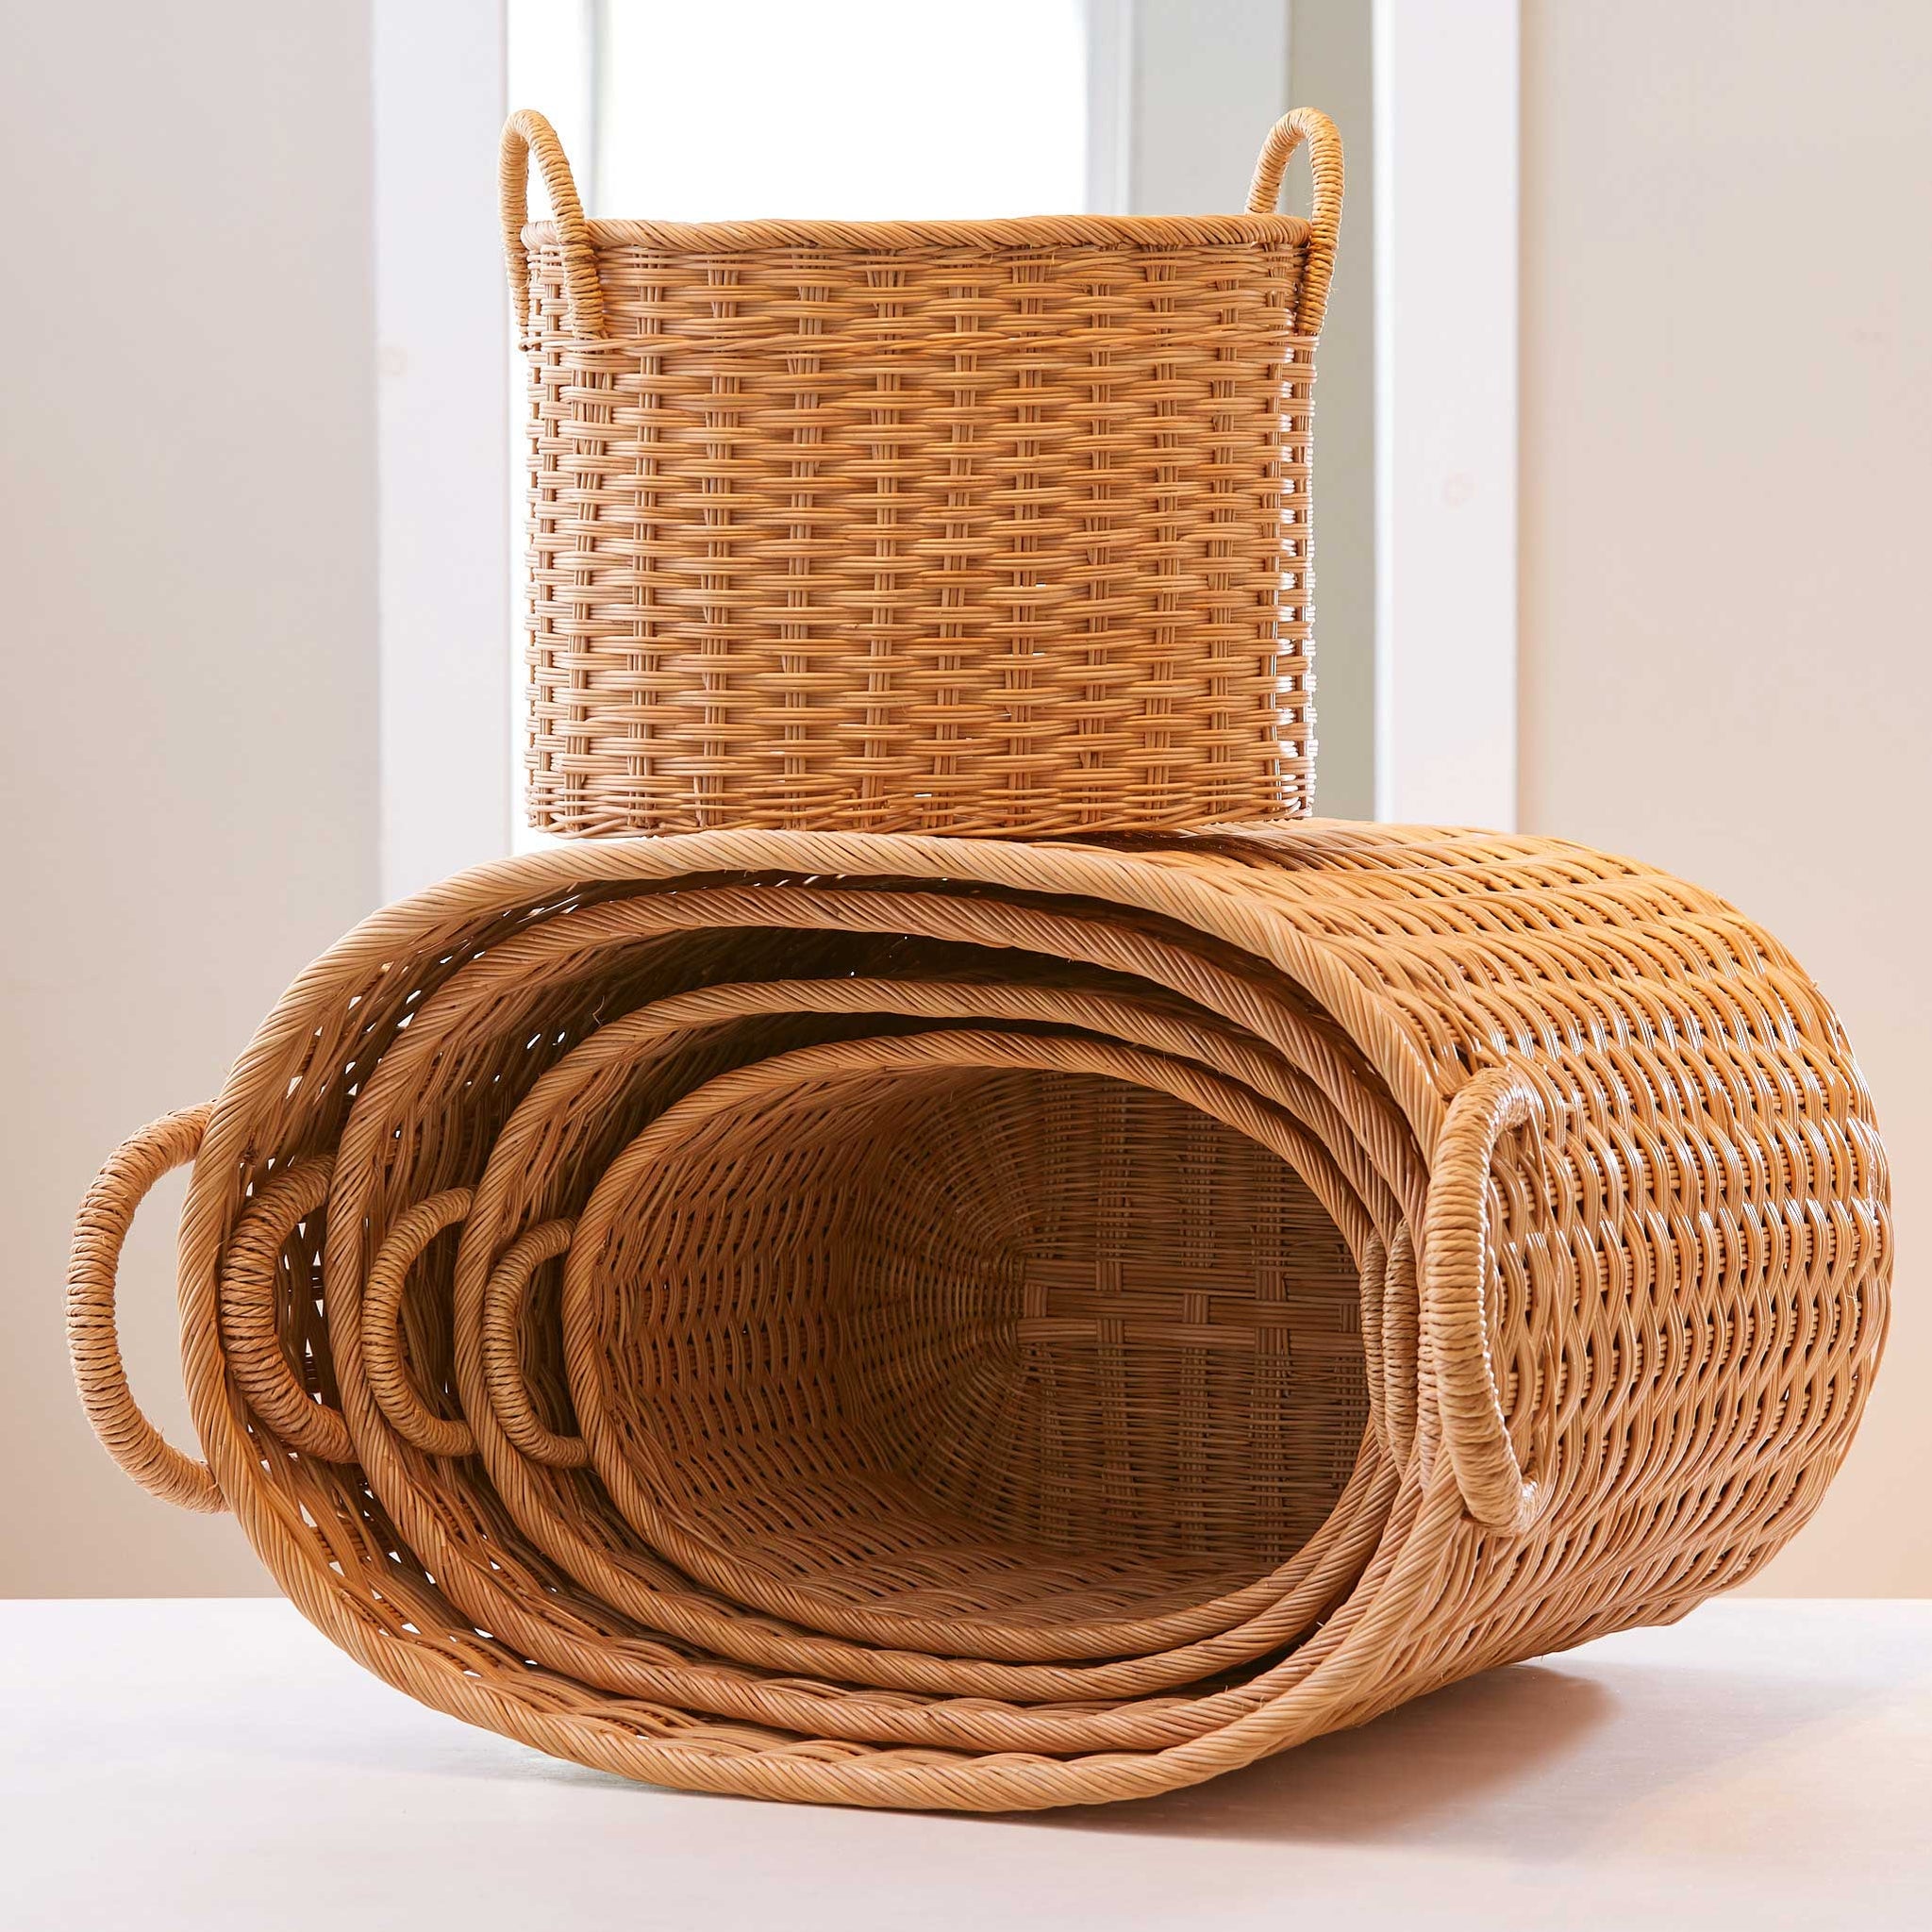 Bathroom Storage Basket 